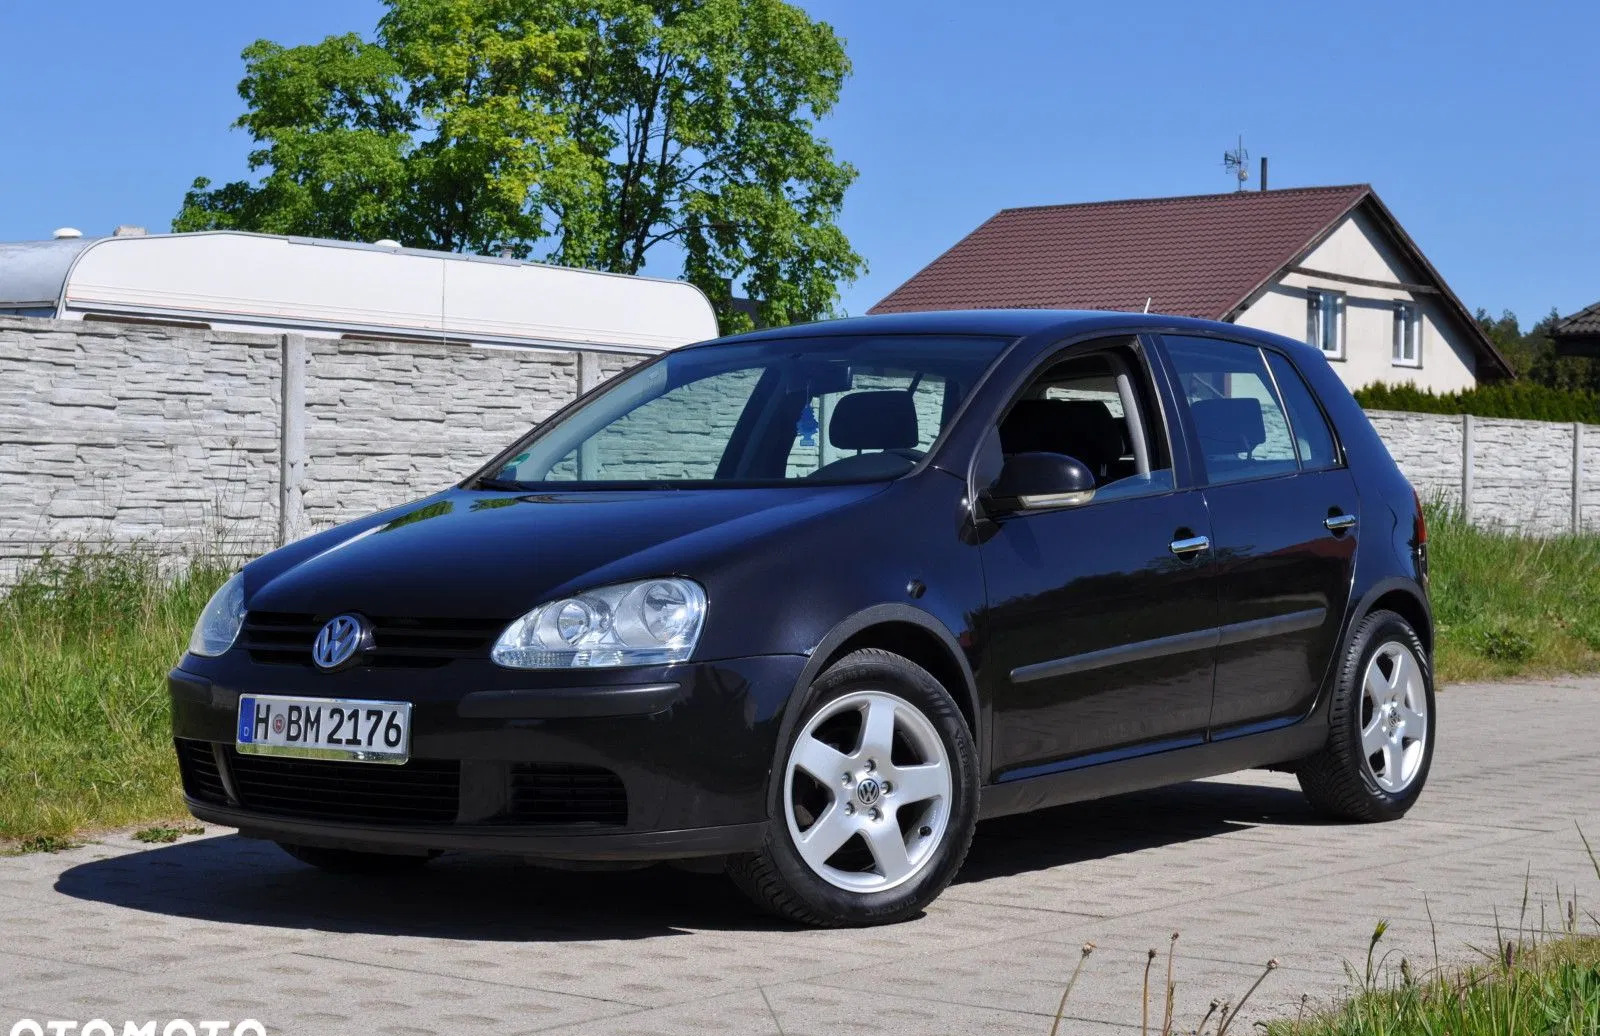 volkswagen Volkswagen Golf cena 10400 przebieg: 287000, rok produkcji 2005 z Nidzica